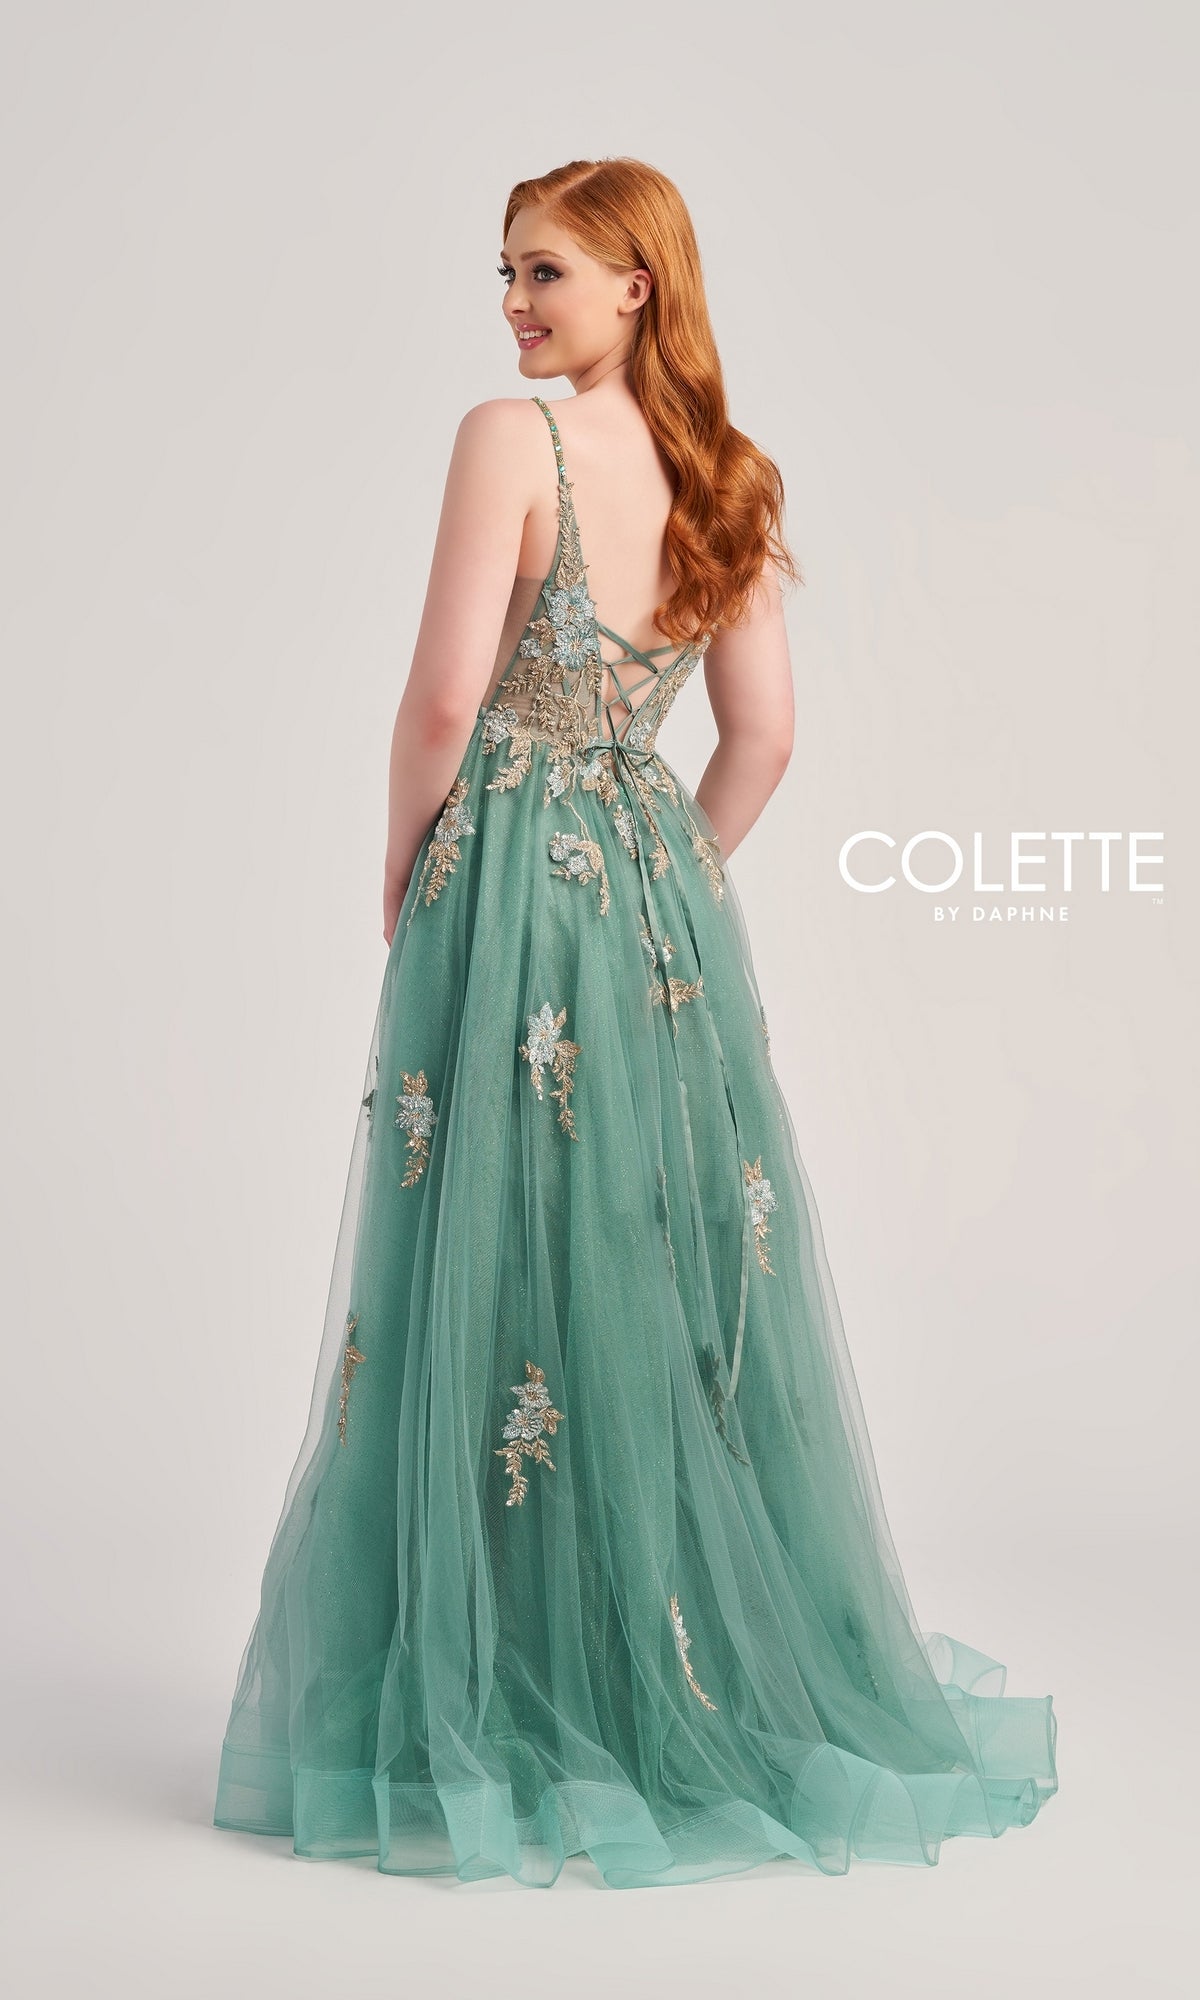 Glitter-Lace Colette Designer Prom Gown CL5143